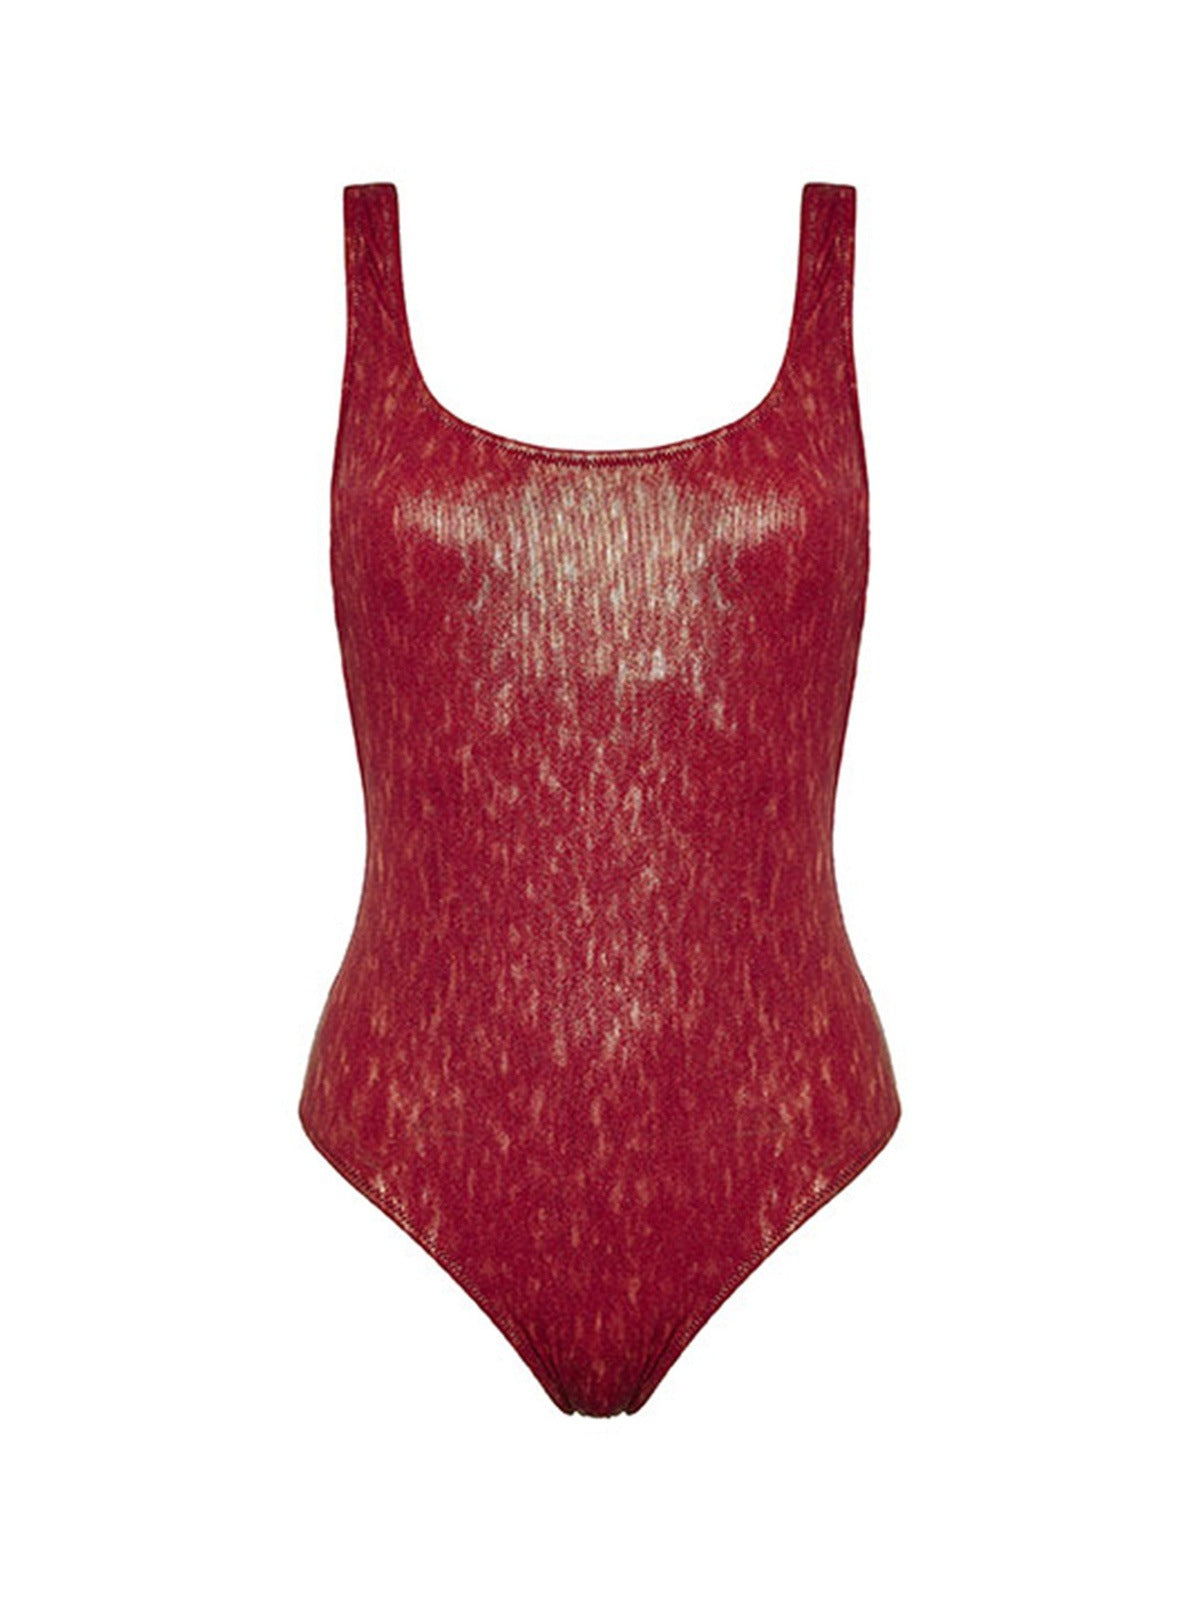 Pandora swimsuit in Red Tortuga